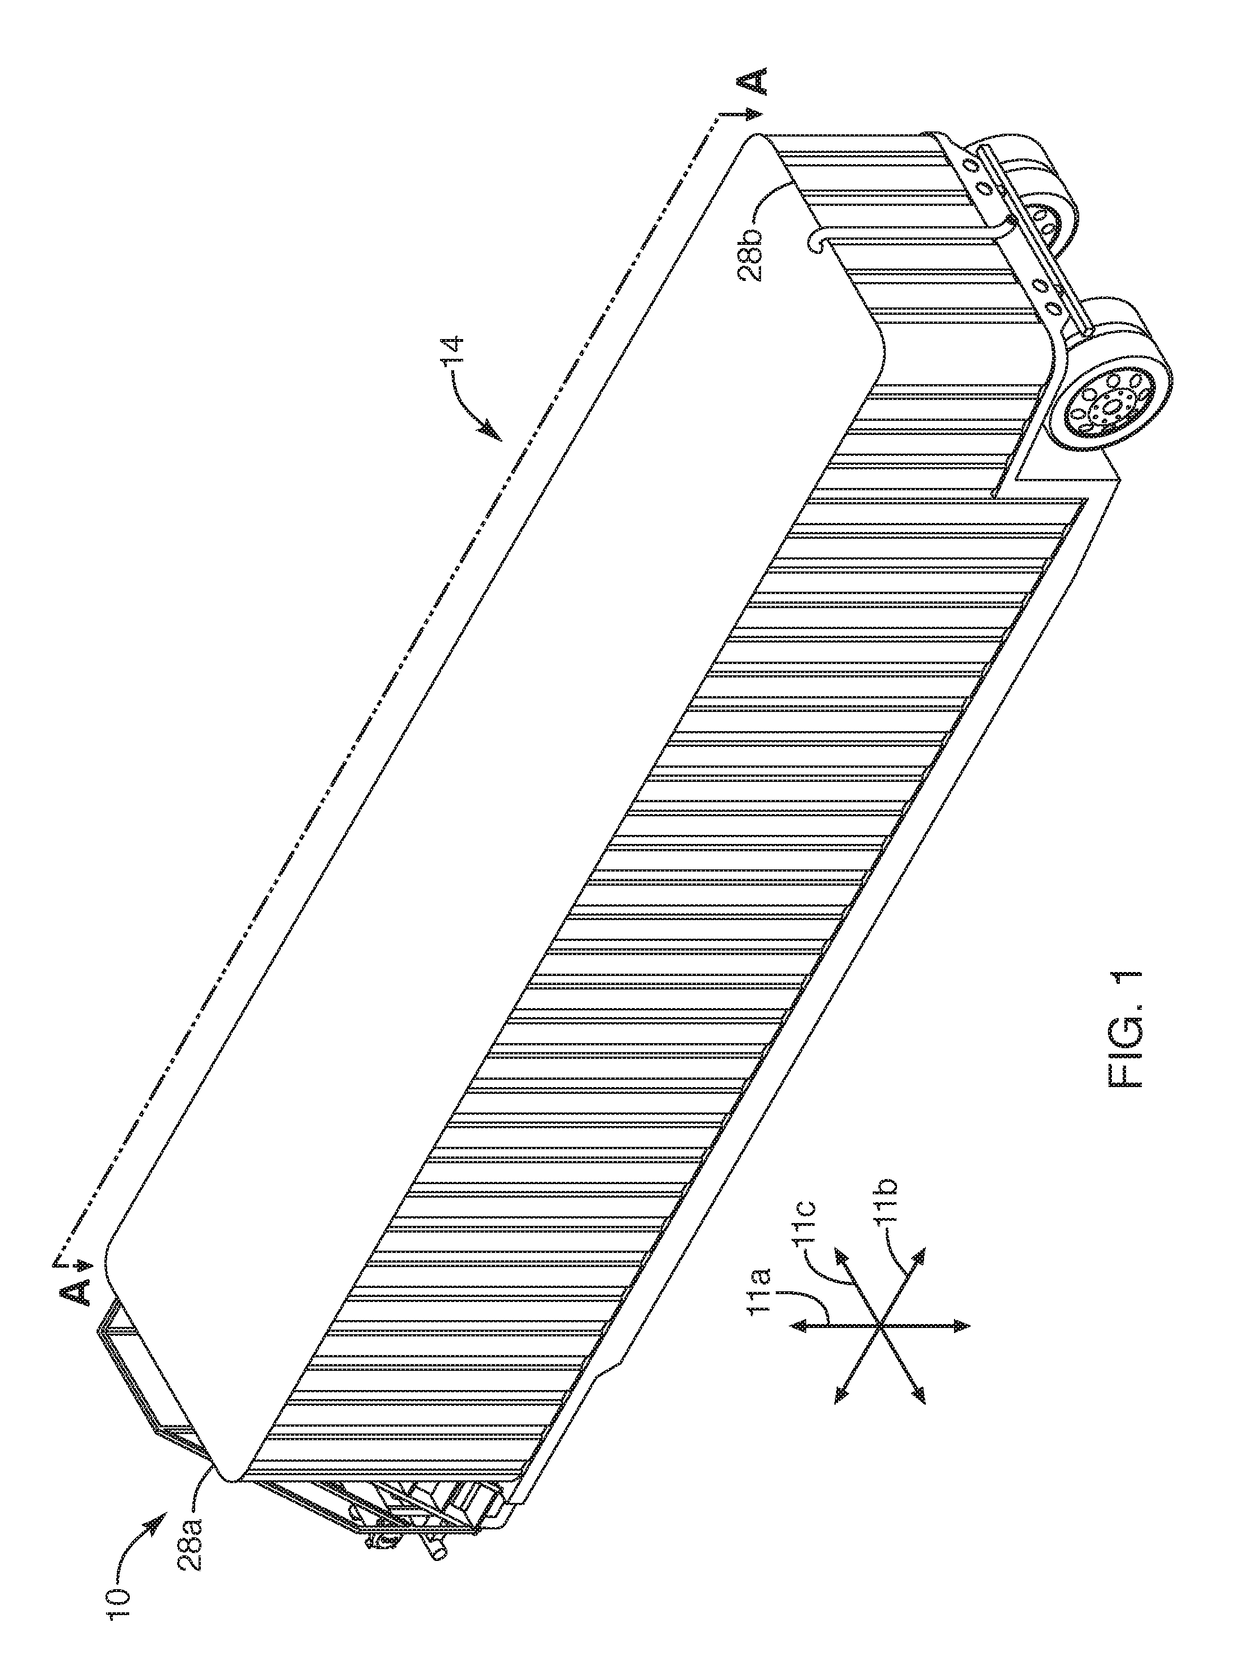 Fractionator annular drain apparatus and method